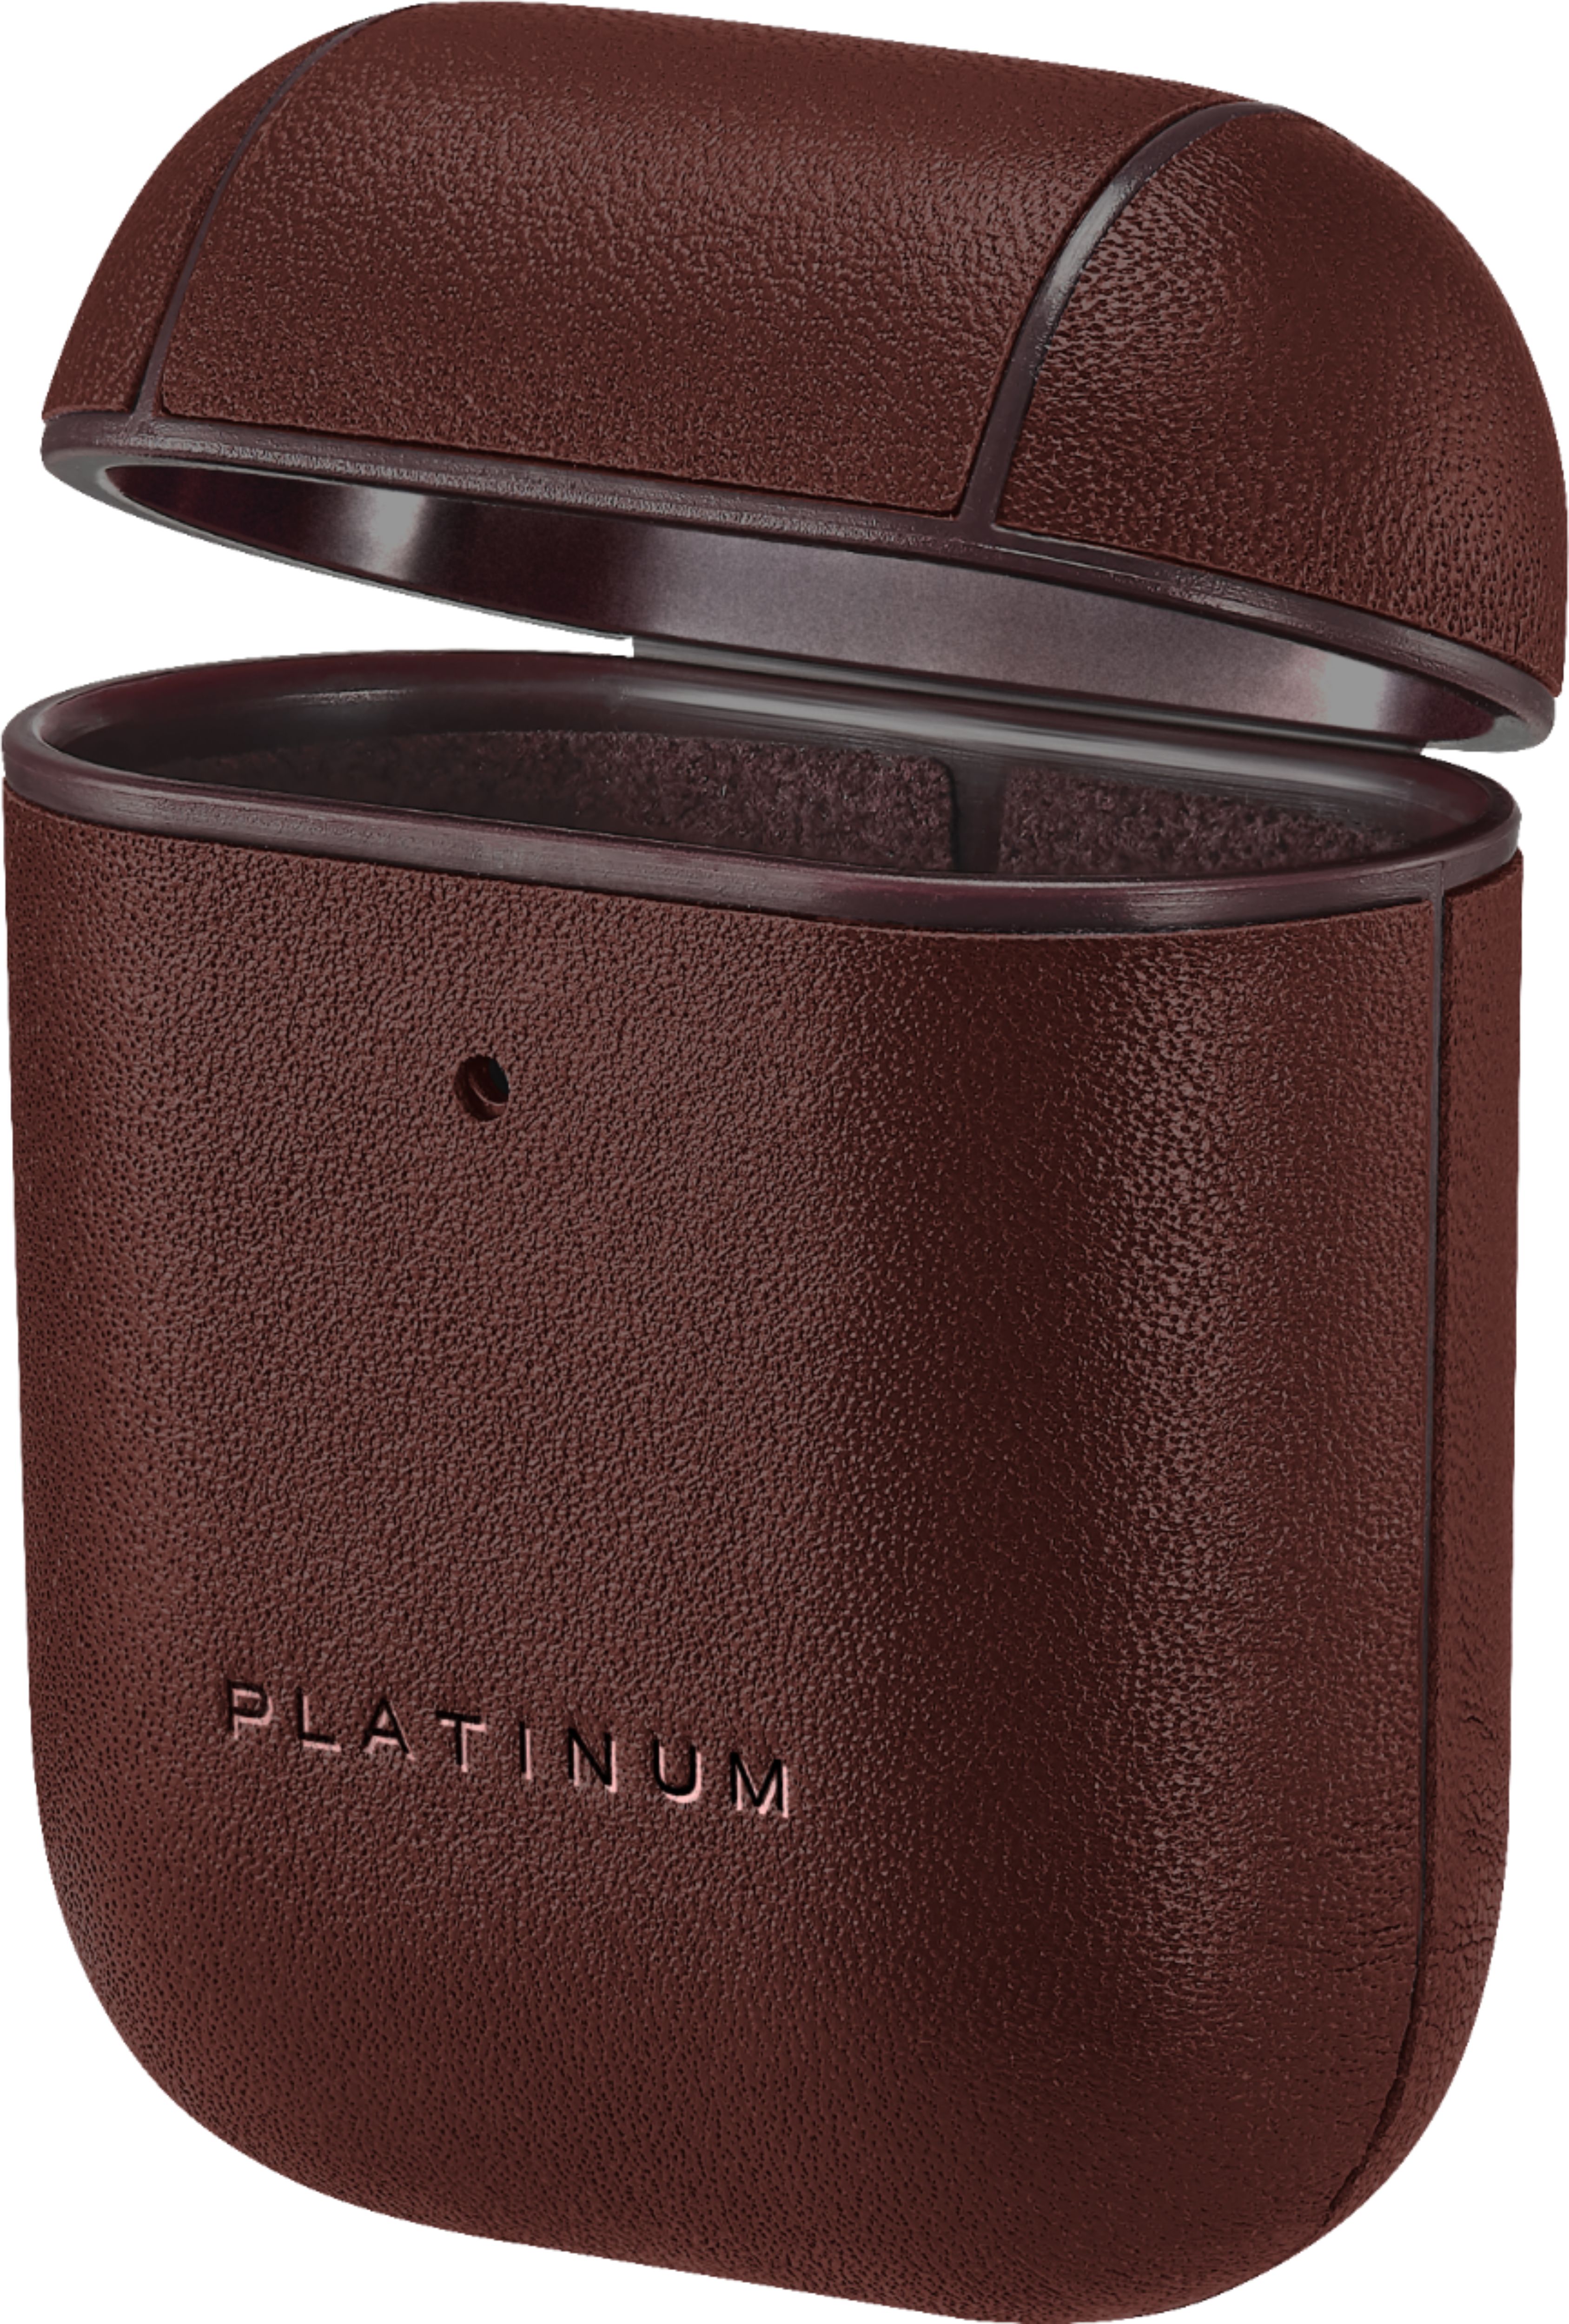 initial efterligne øst Platinum™ Leather Case for Apple AirPods Brown PT-APLCBN - Best Buy